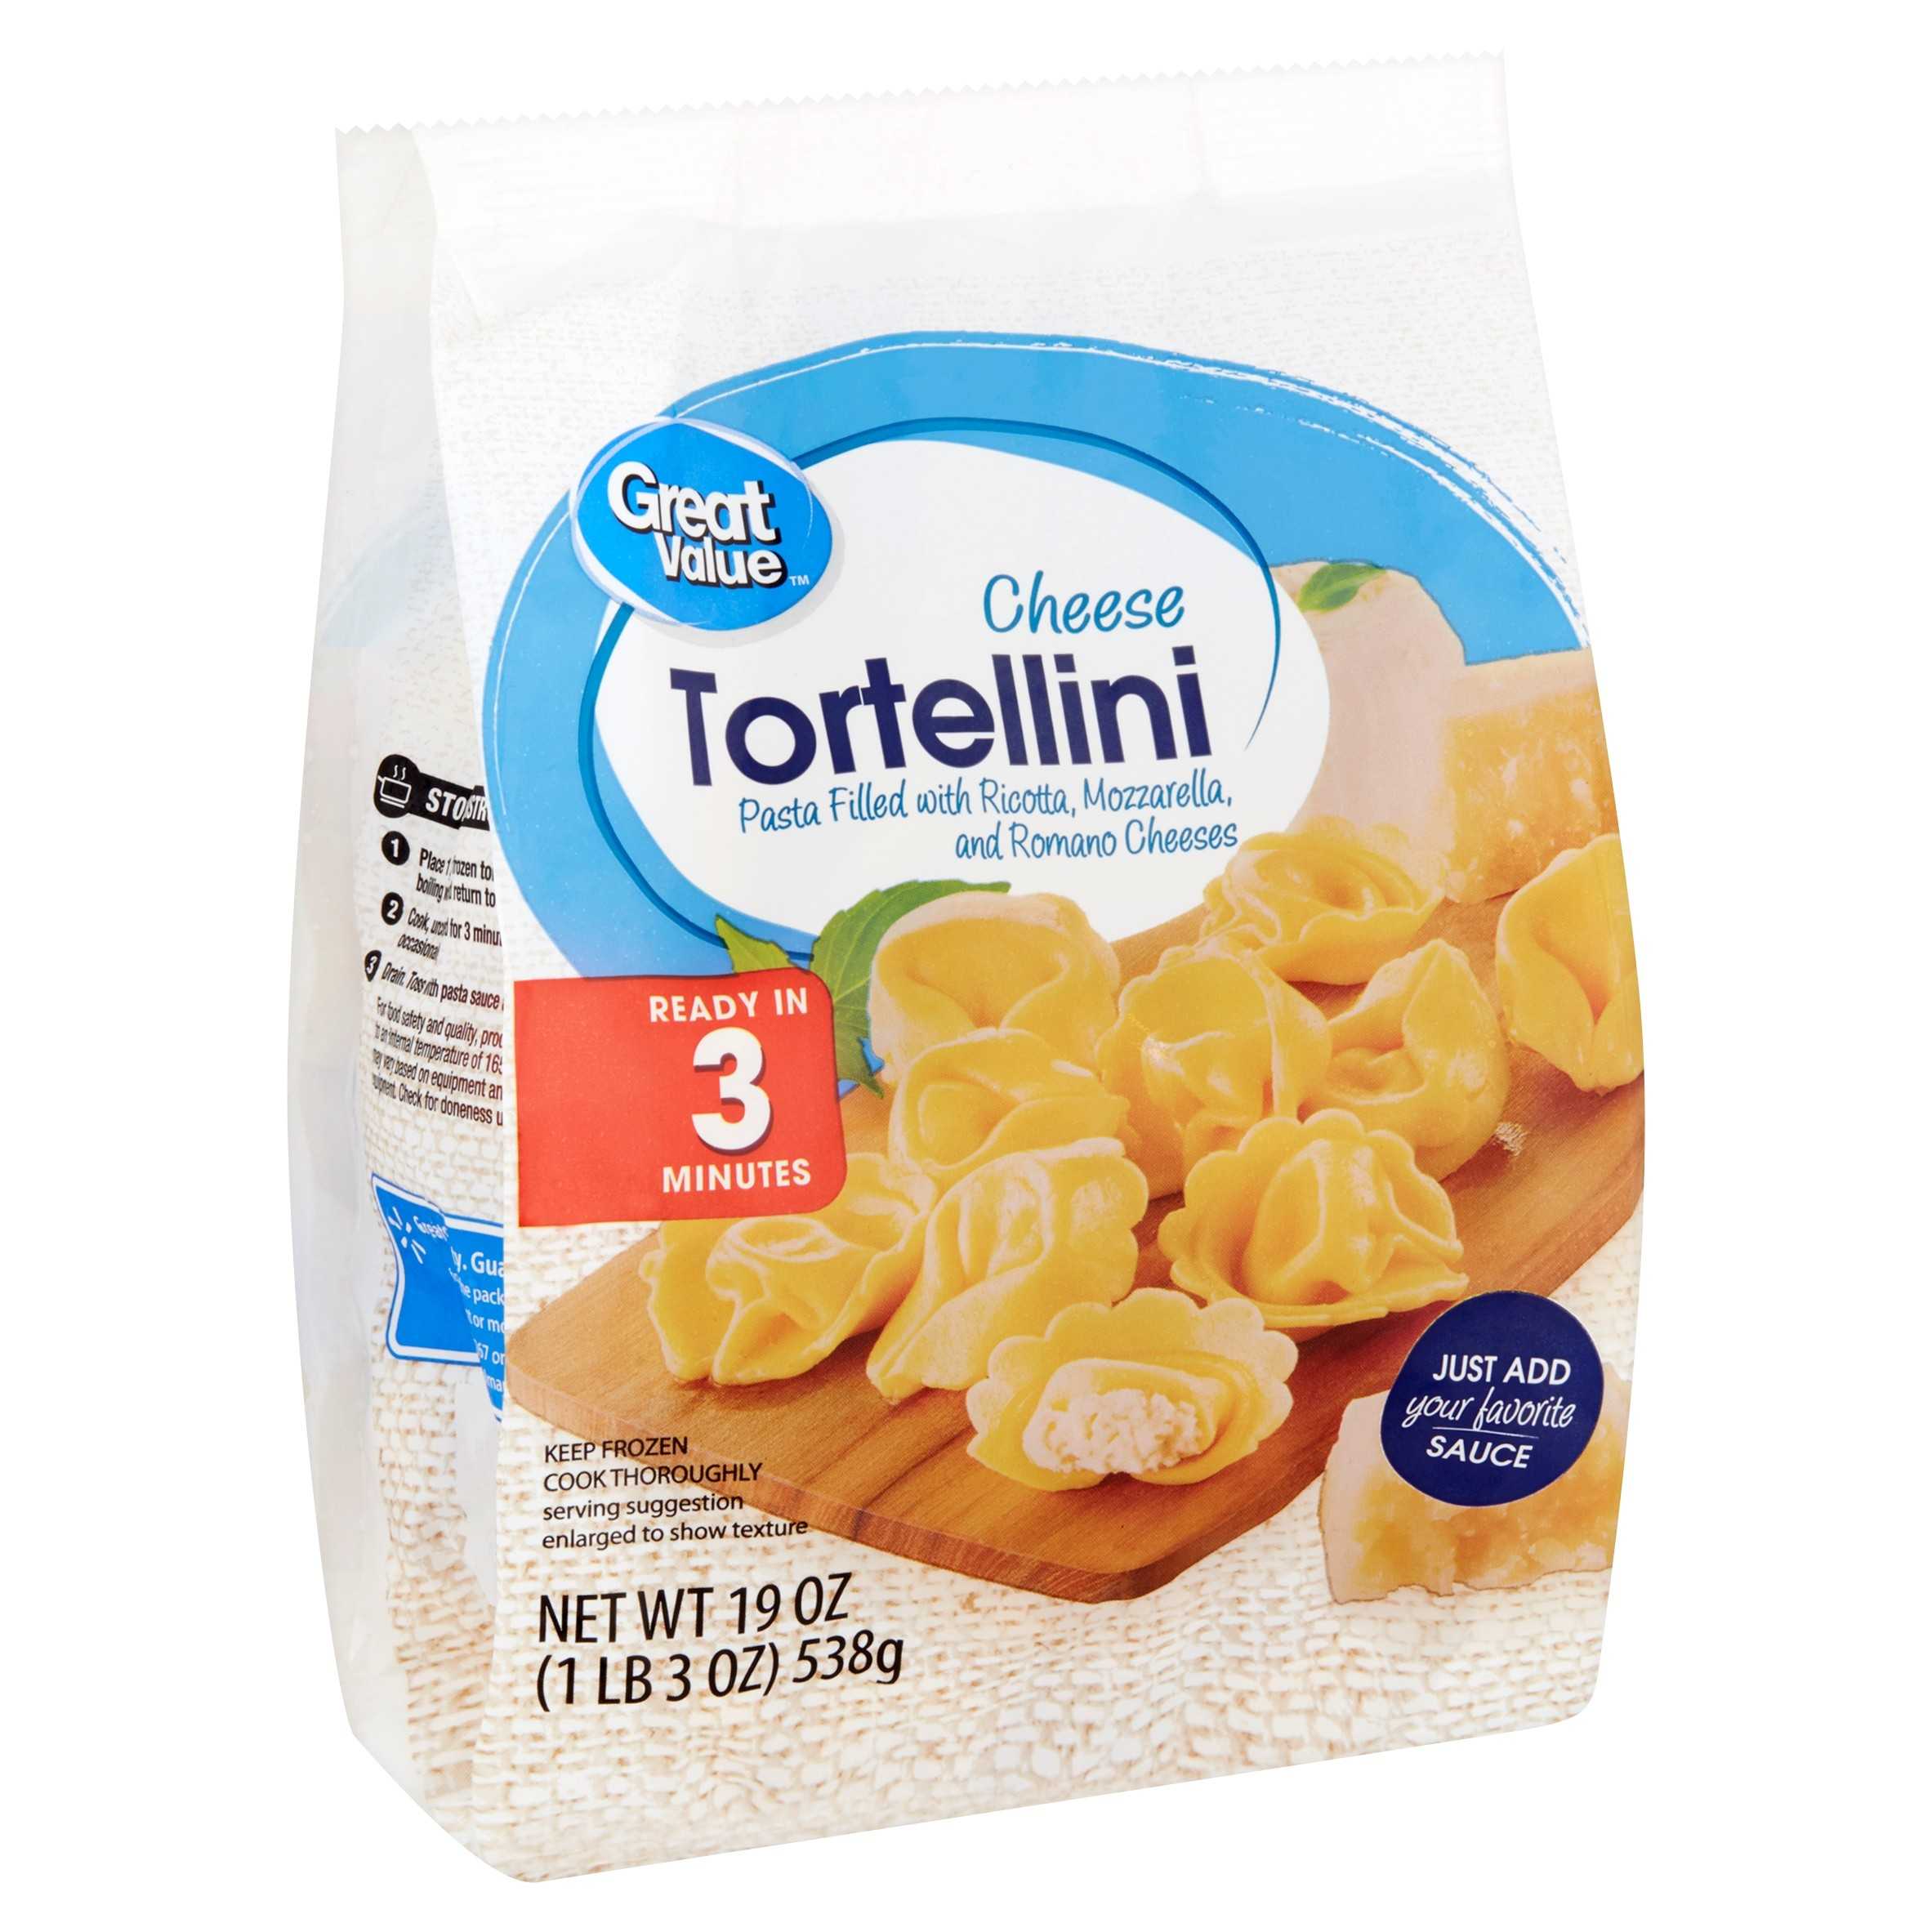 Great Value Cheese Tortellini Pasta, 19 oz